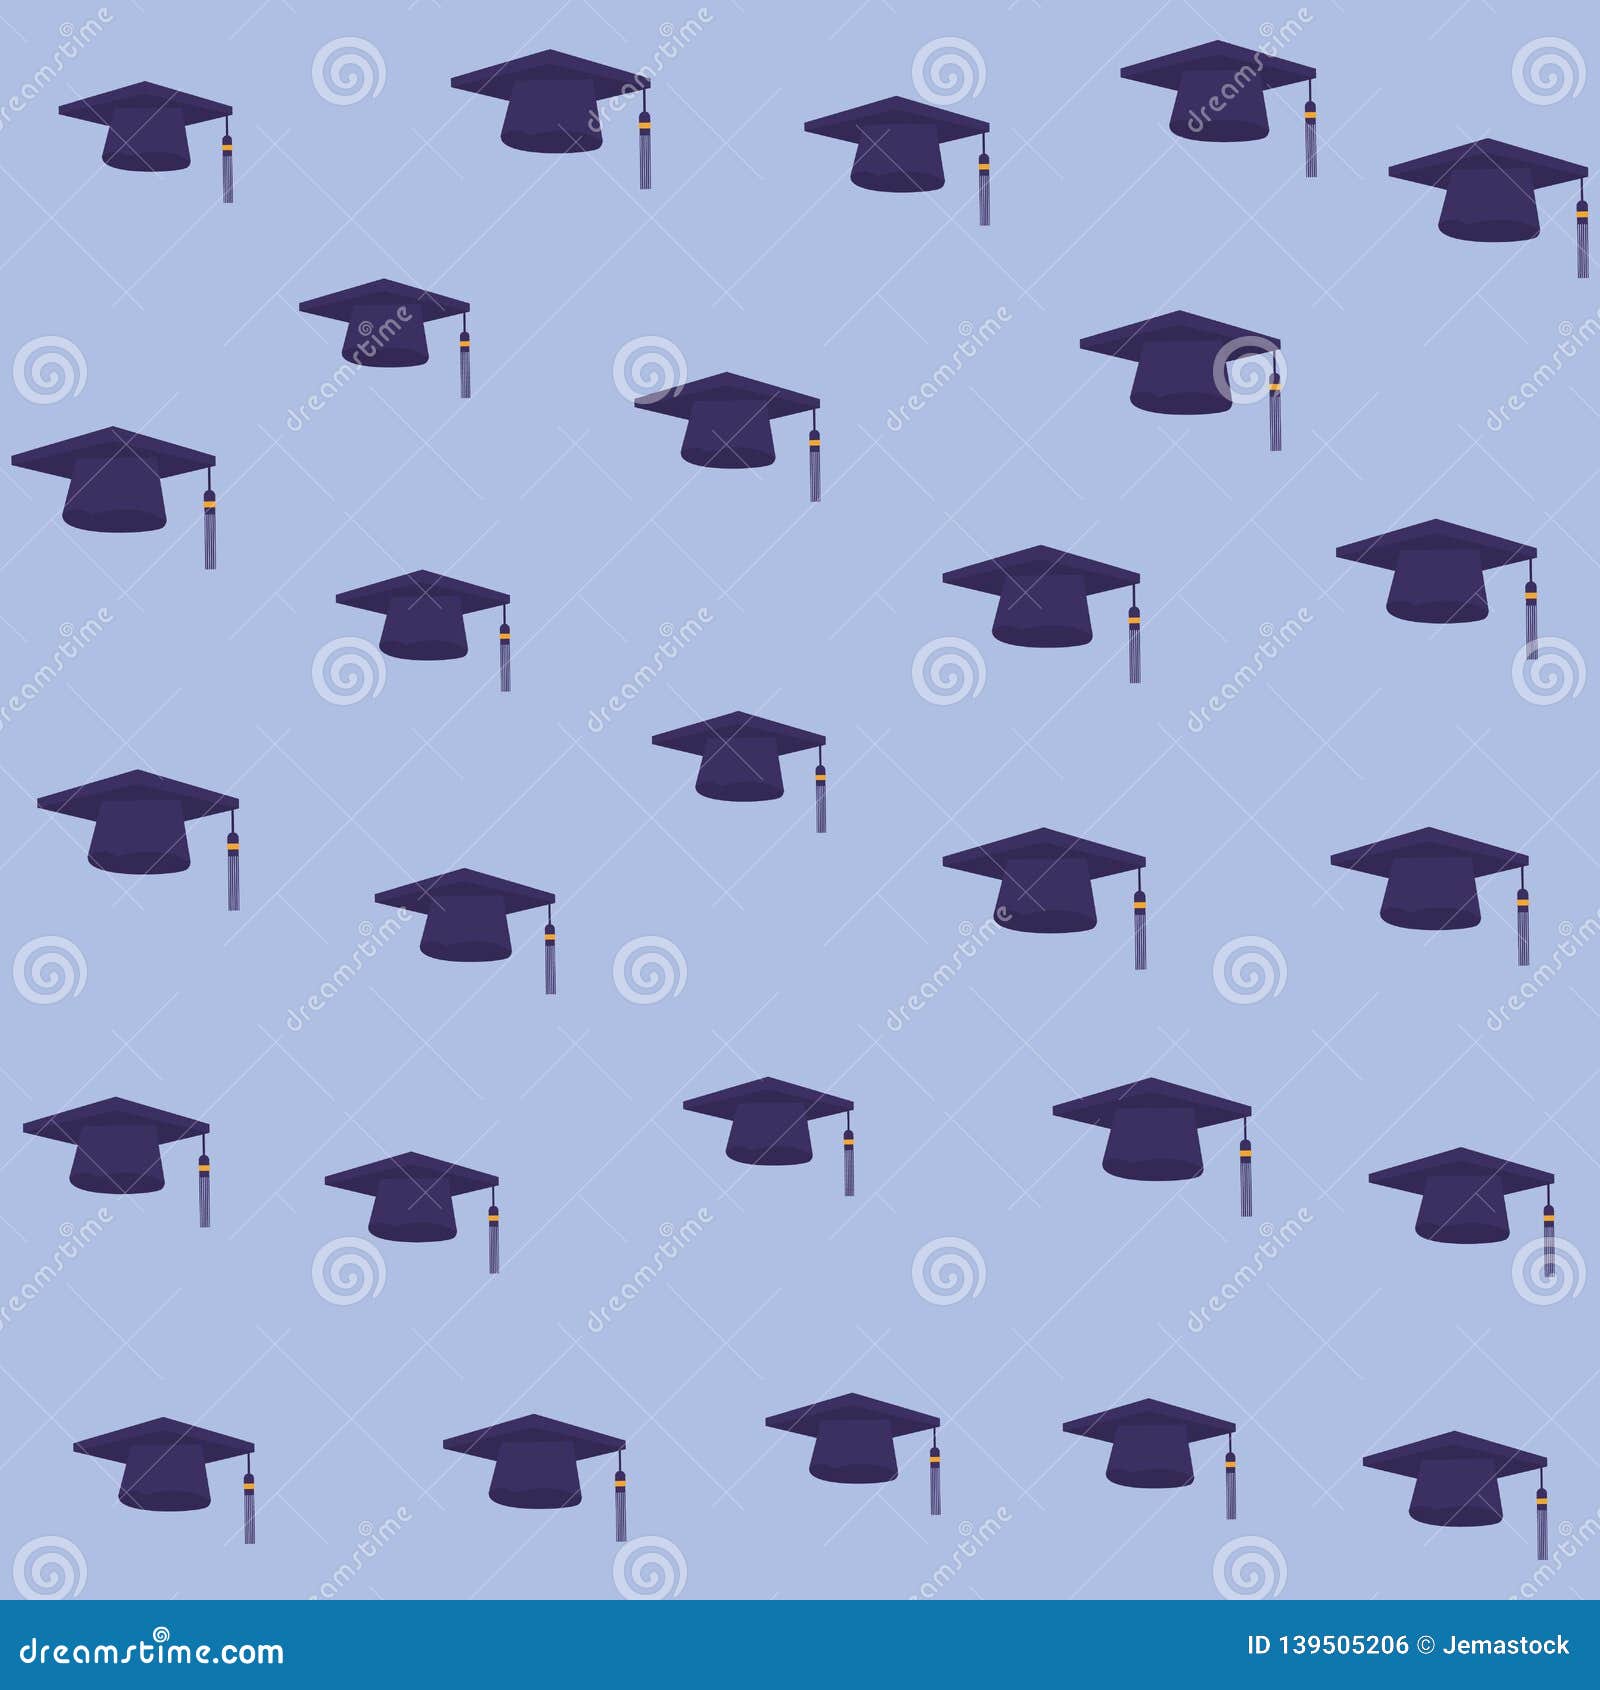 Graduation Wallpaper Images  Free Download on Freepik